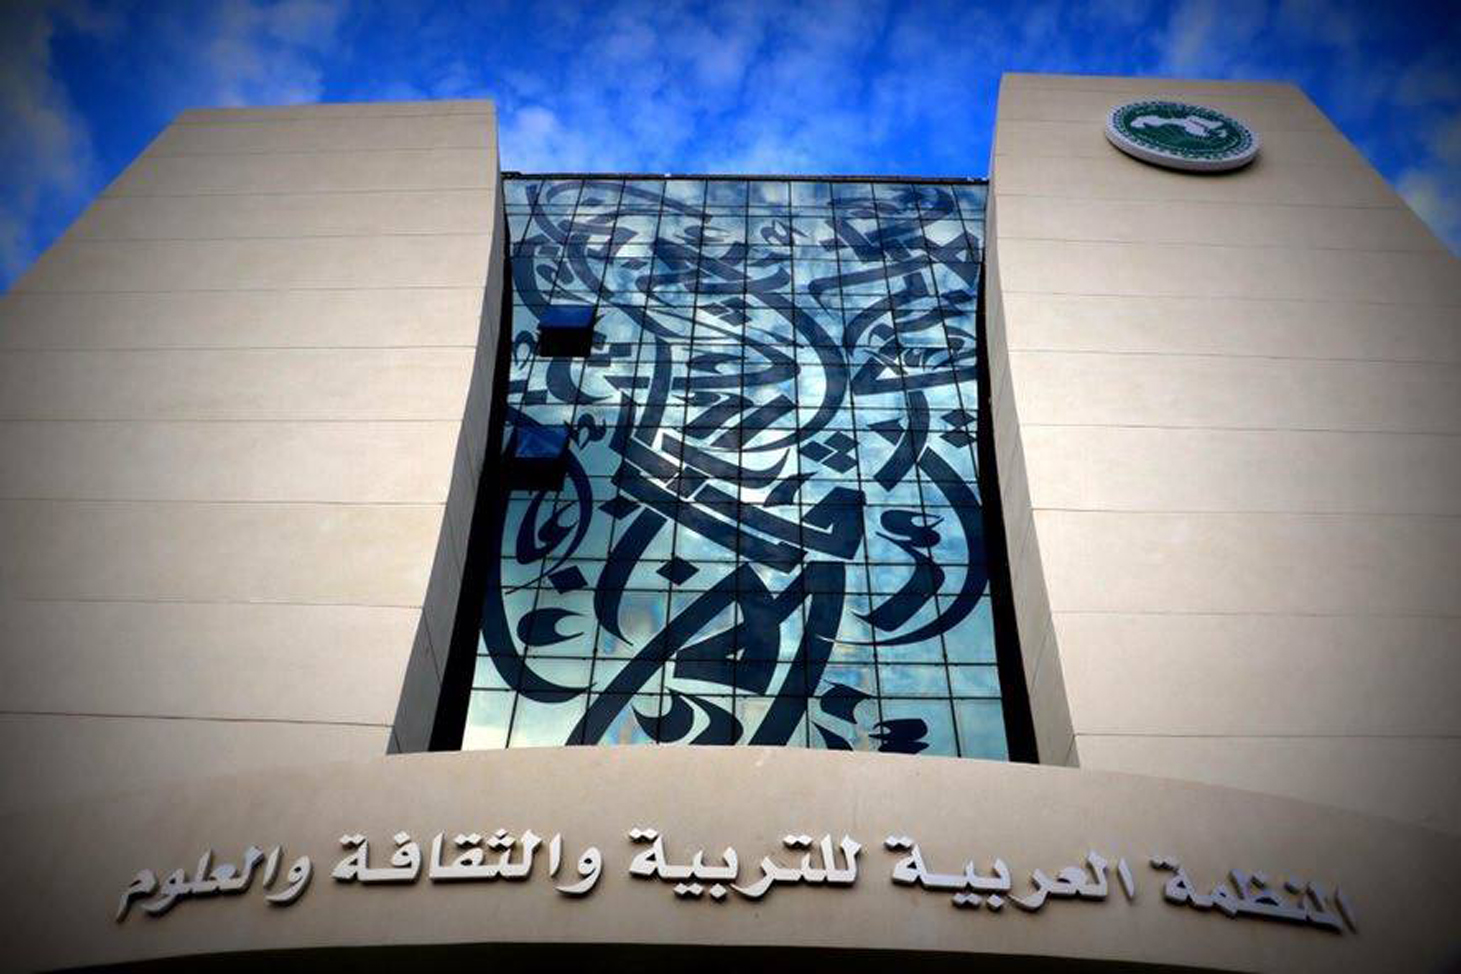 The Arab League Educational, Cultural and Scientific Organization (ALECSO)